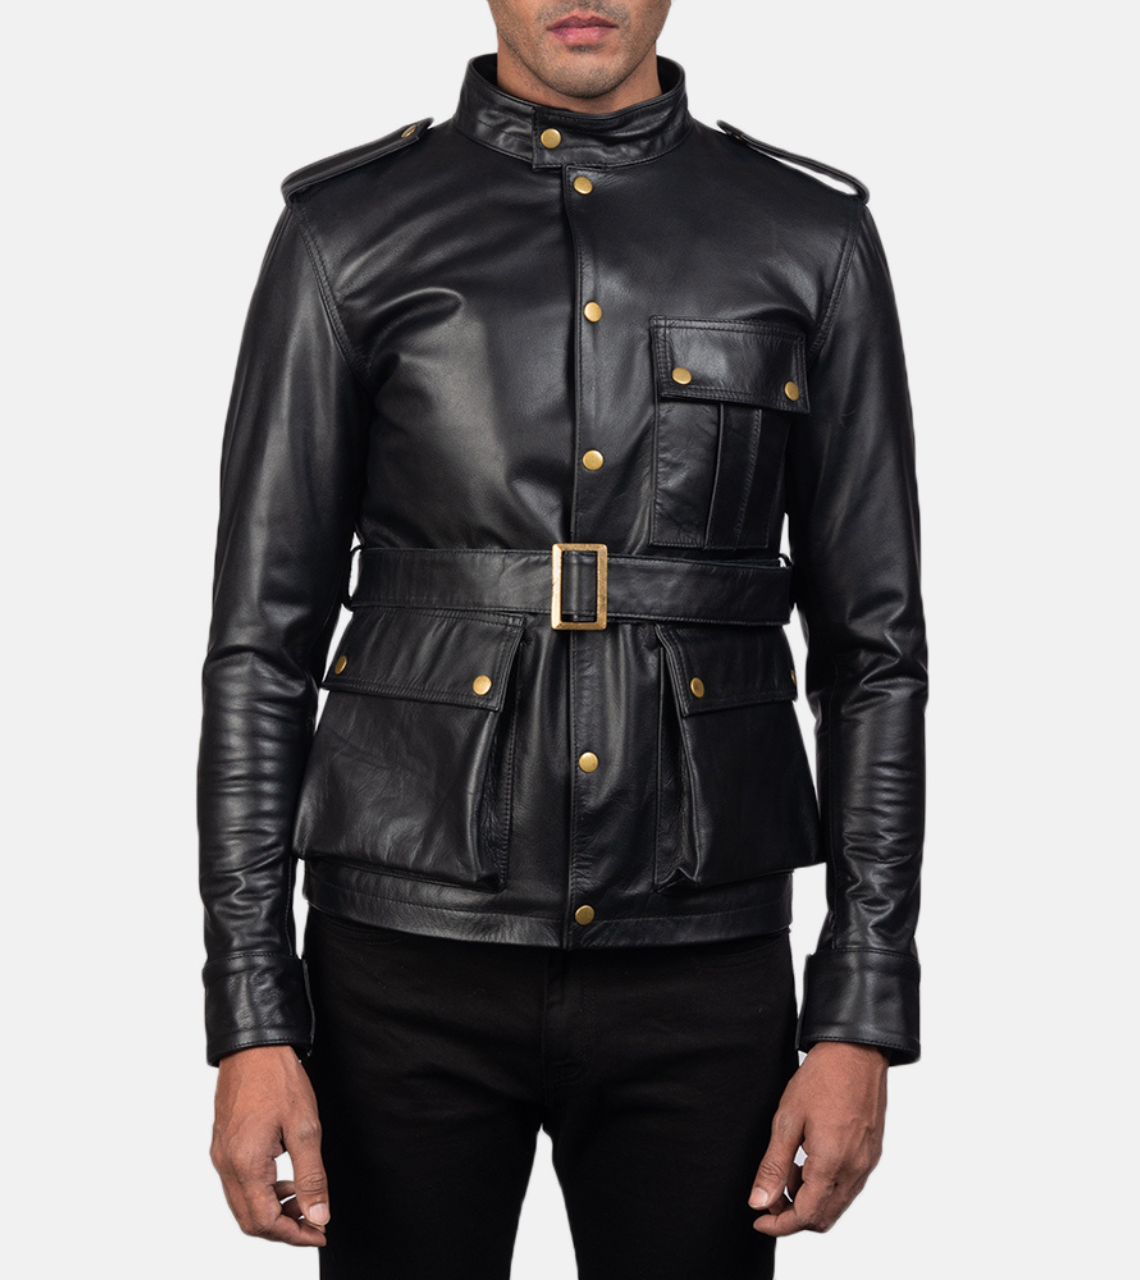 Hauspuff Black Leather Jacket